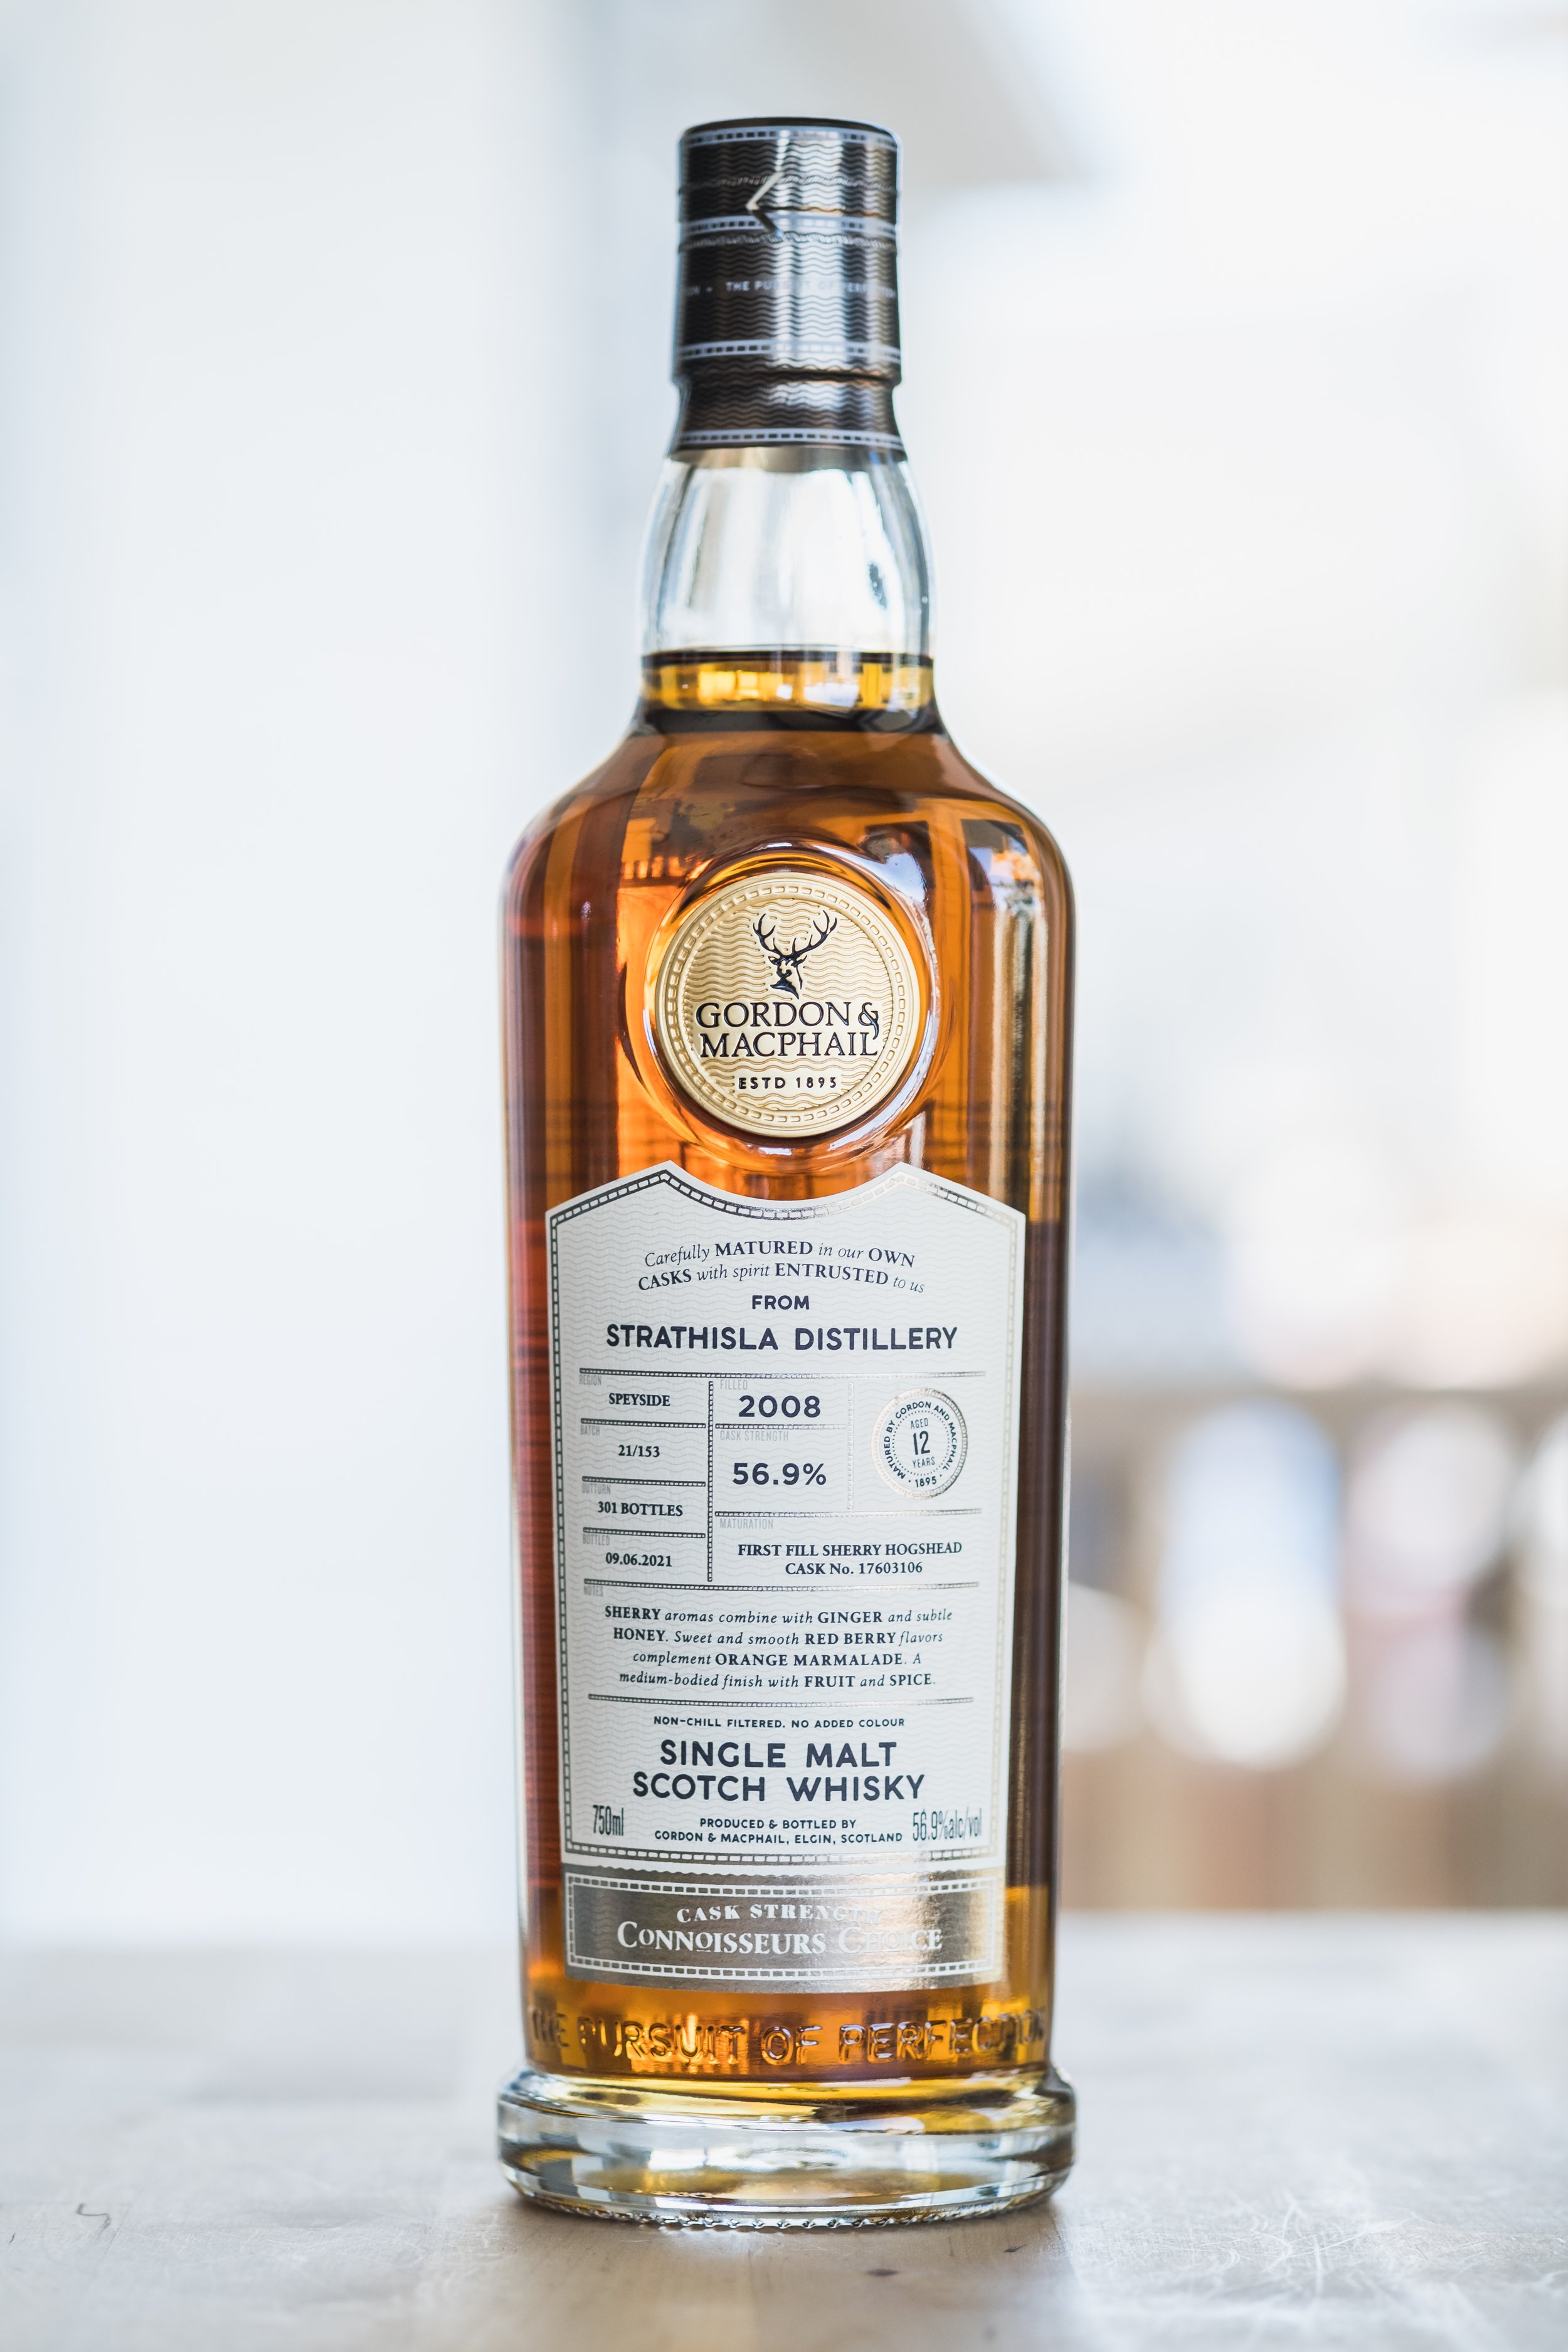 Highland Park 12 Years Single Malt Scotch Whisky – 3 Bottles Combo -  Spiritz & More